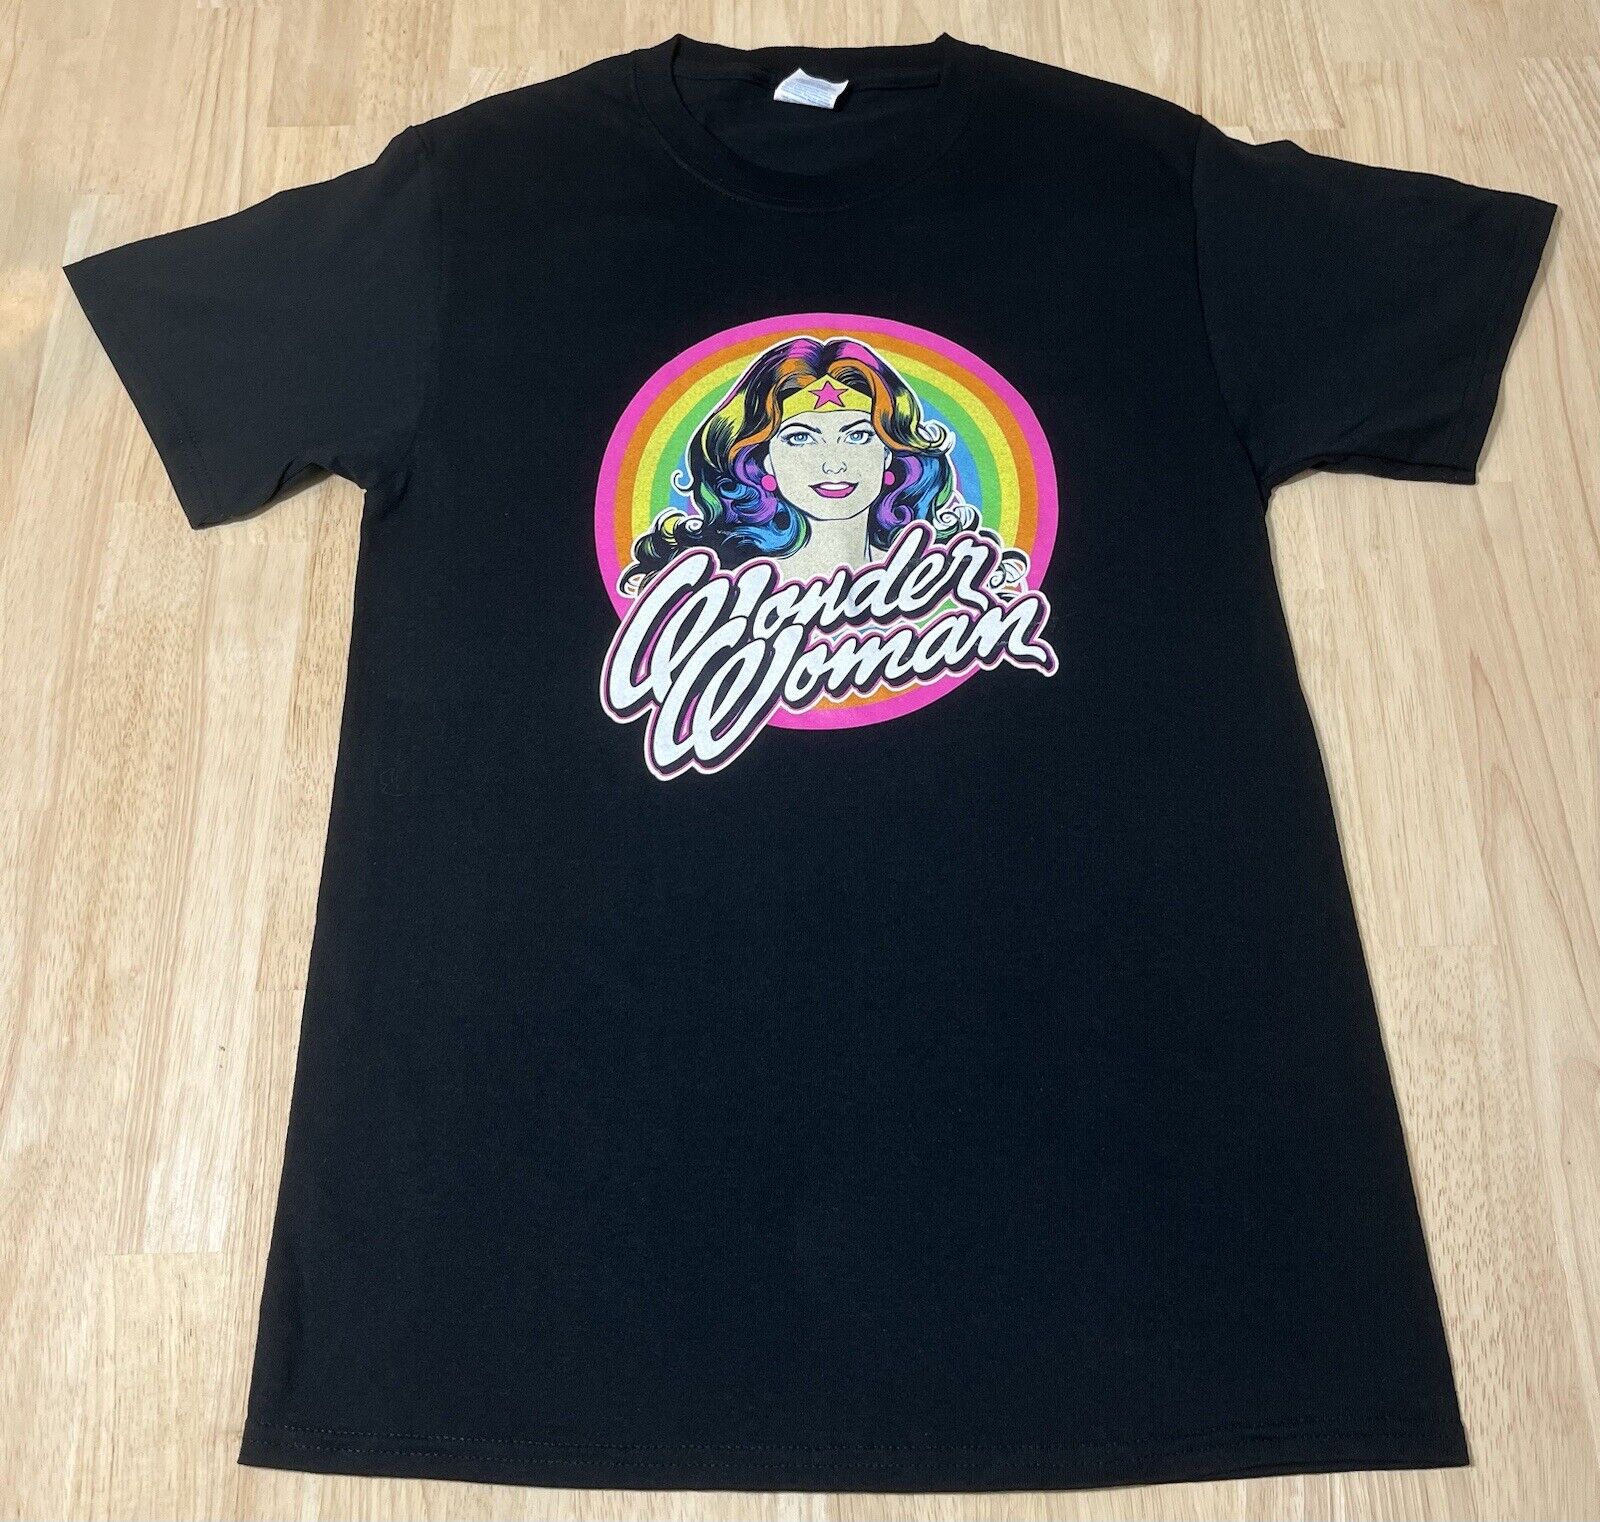 (Womens S) WONDER WOMAN Rainbow Shirt DC Colorful Retro Graphic Tee NWOT